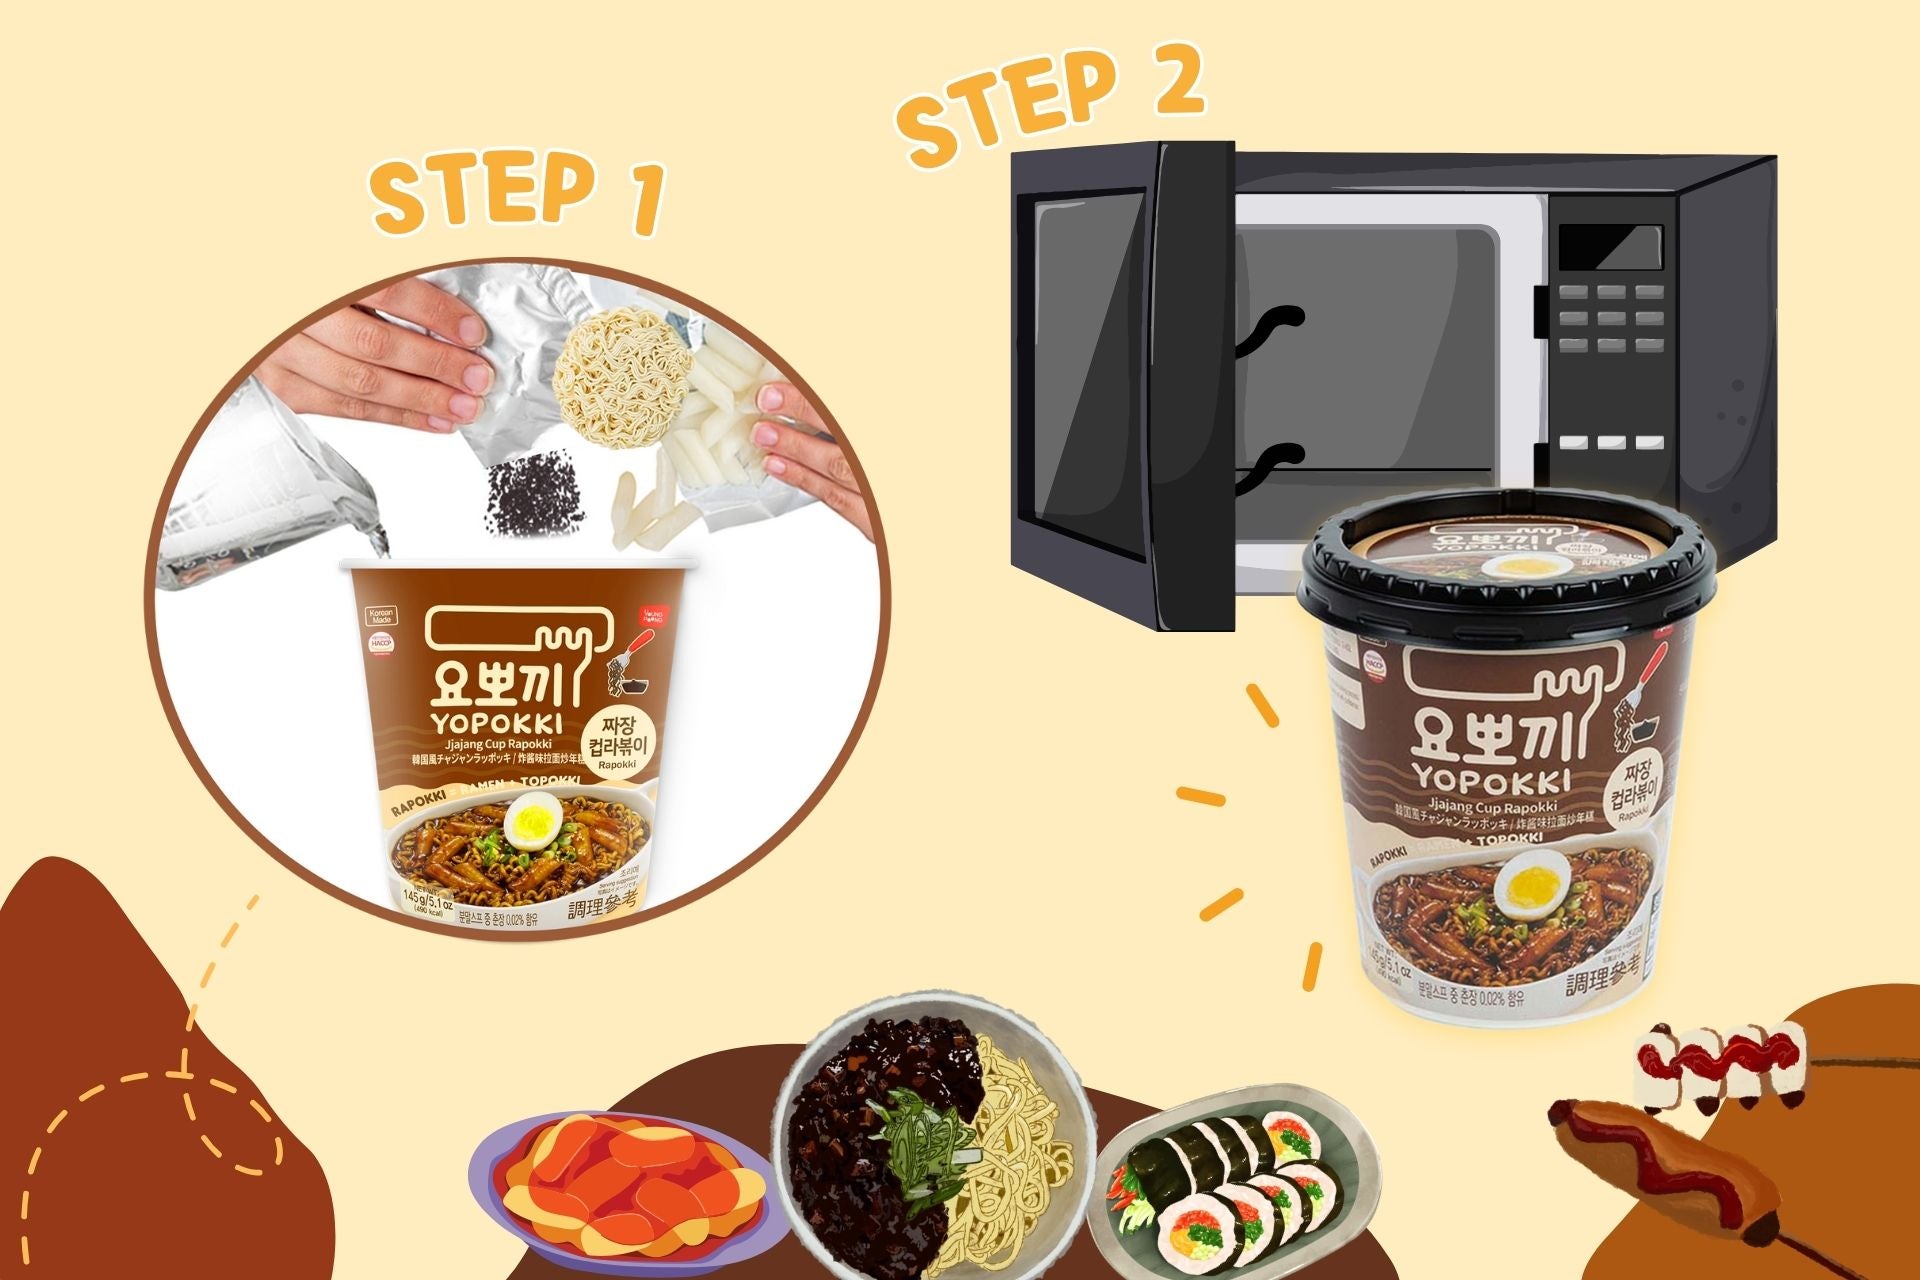 yopokki-jjajang-rabokki-cup-recipe-traditional-Korean-food-Microwave-Cup-Recipe